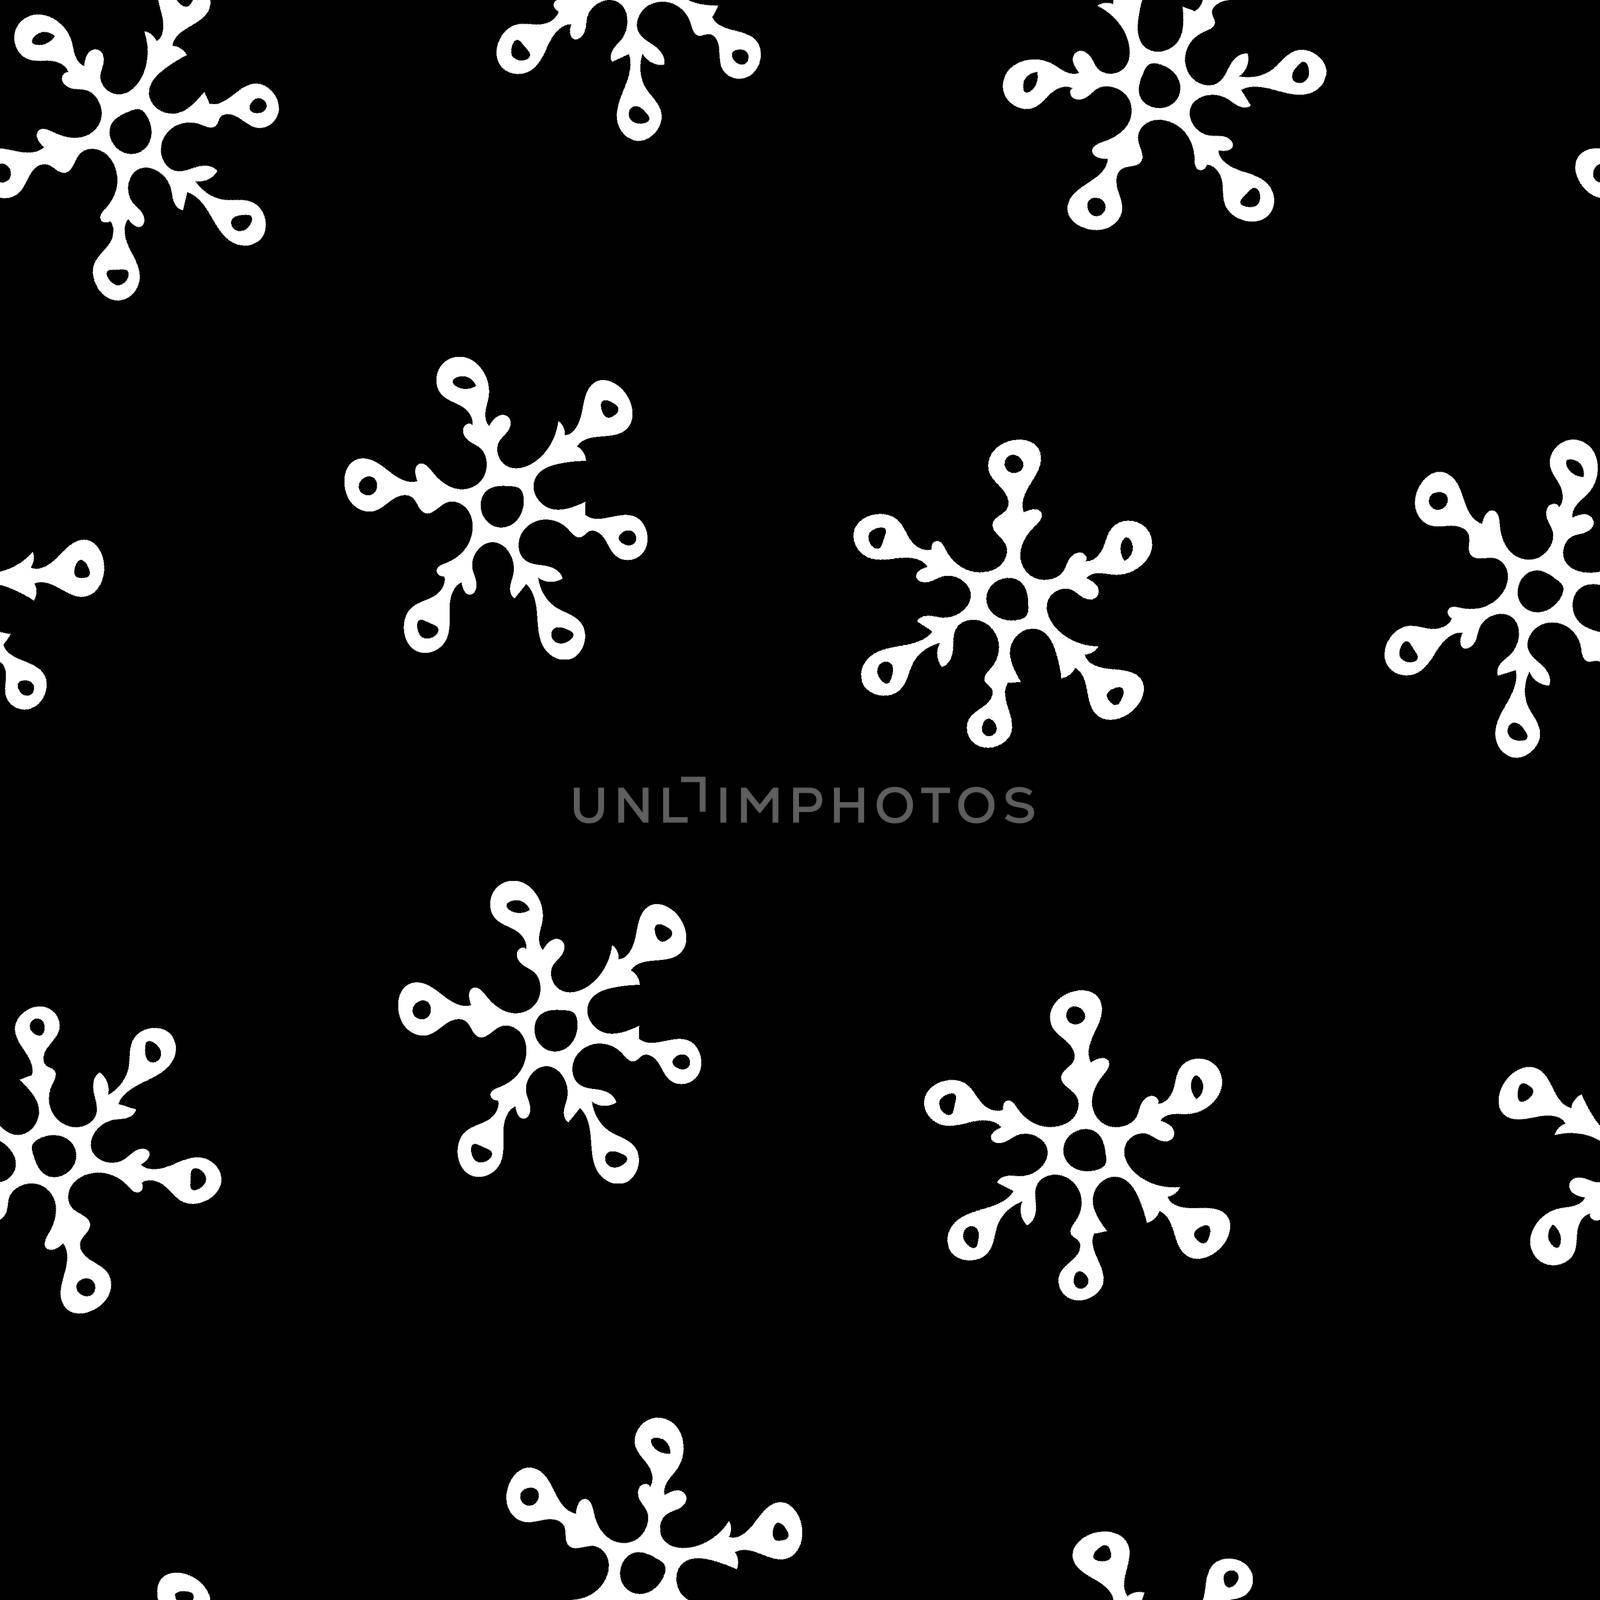 Seamless Pattern with Snowflakes on Black Background. by Rina_Dozornaya